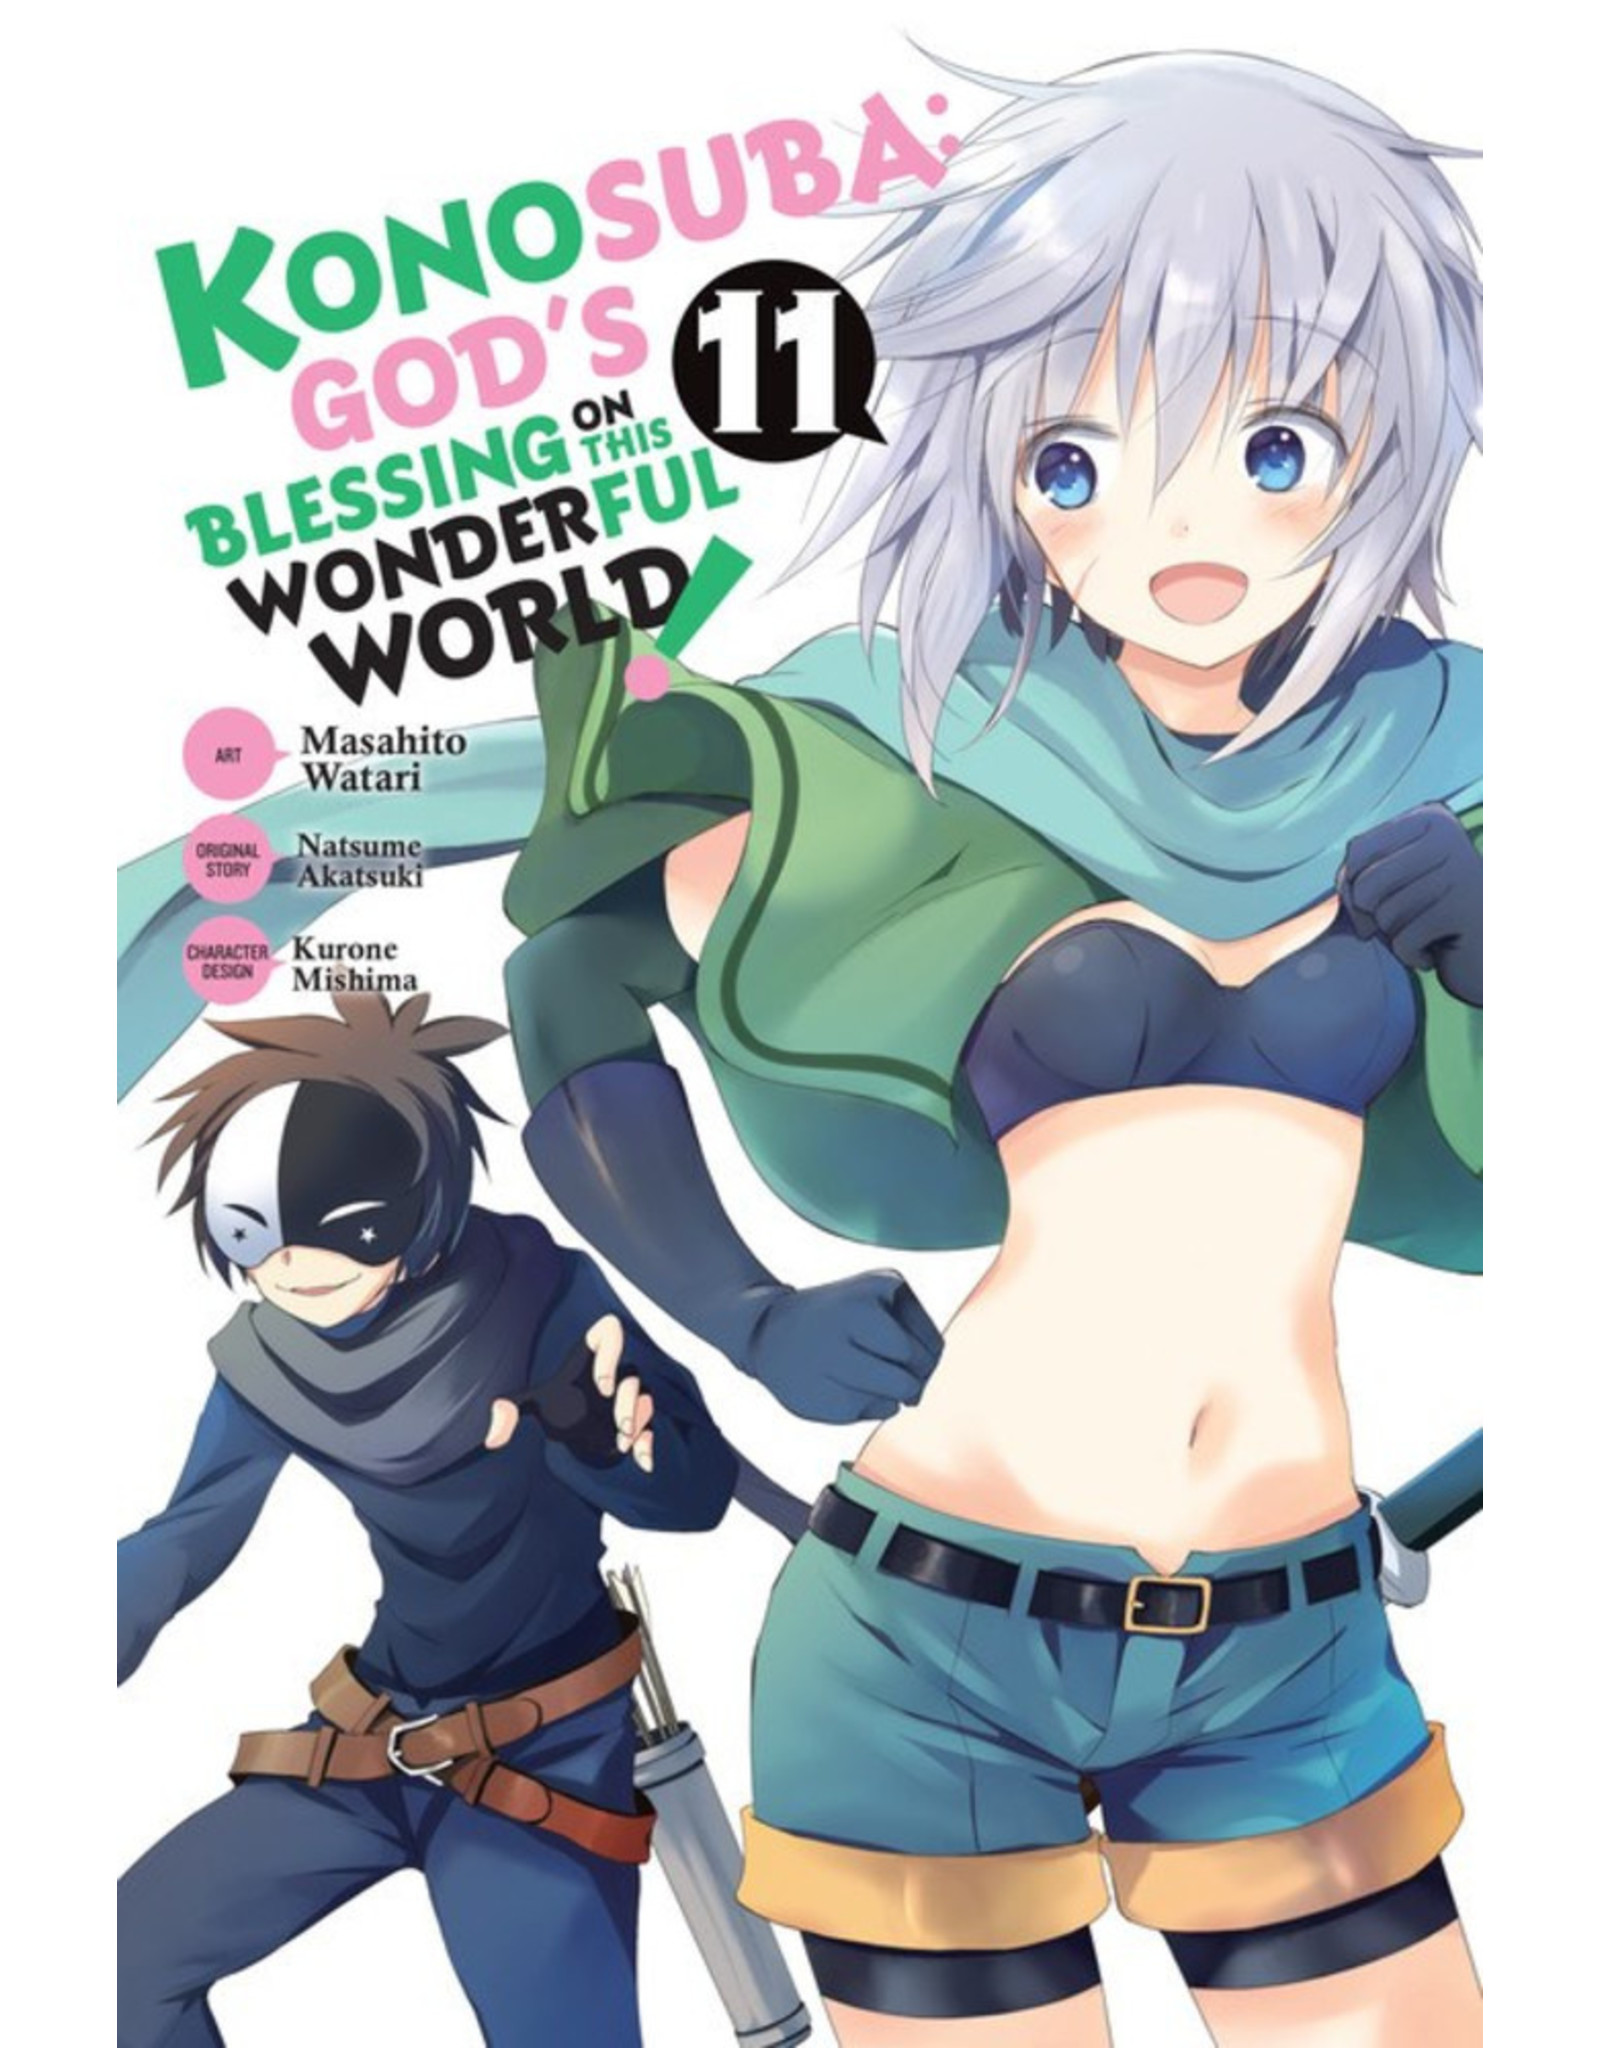 Konosuba God's Wonderful Blessing On This Wonderful World Vol.11